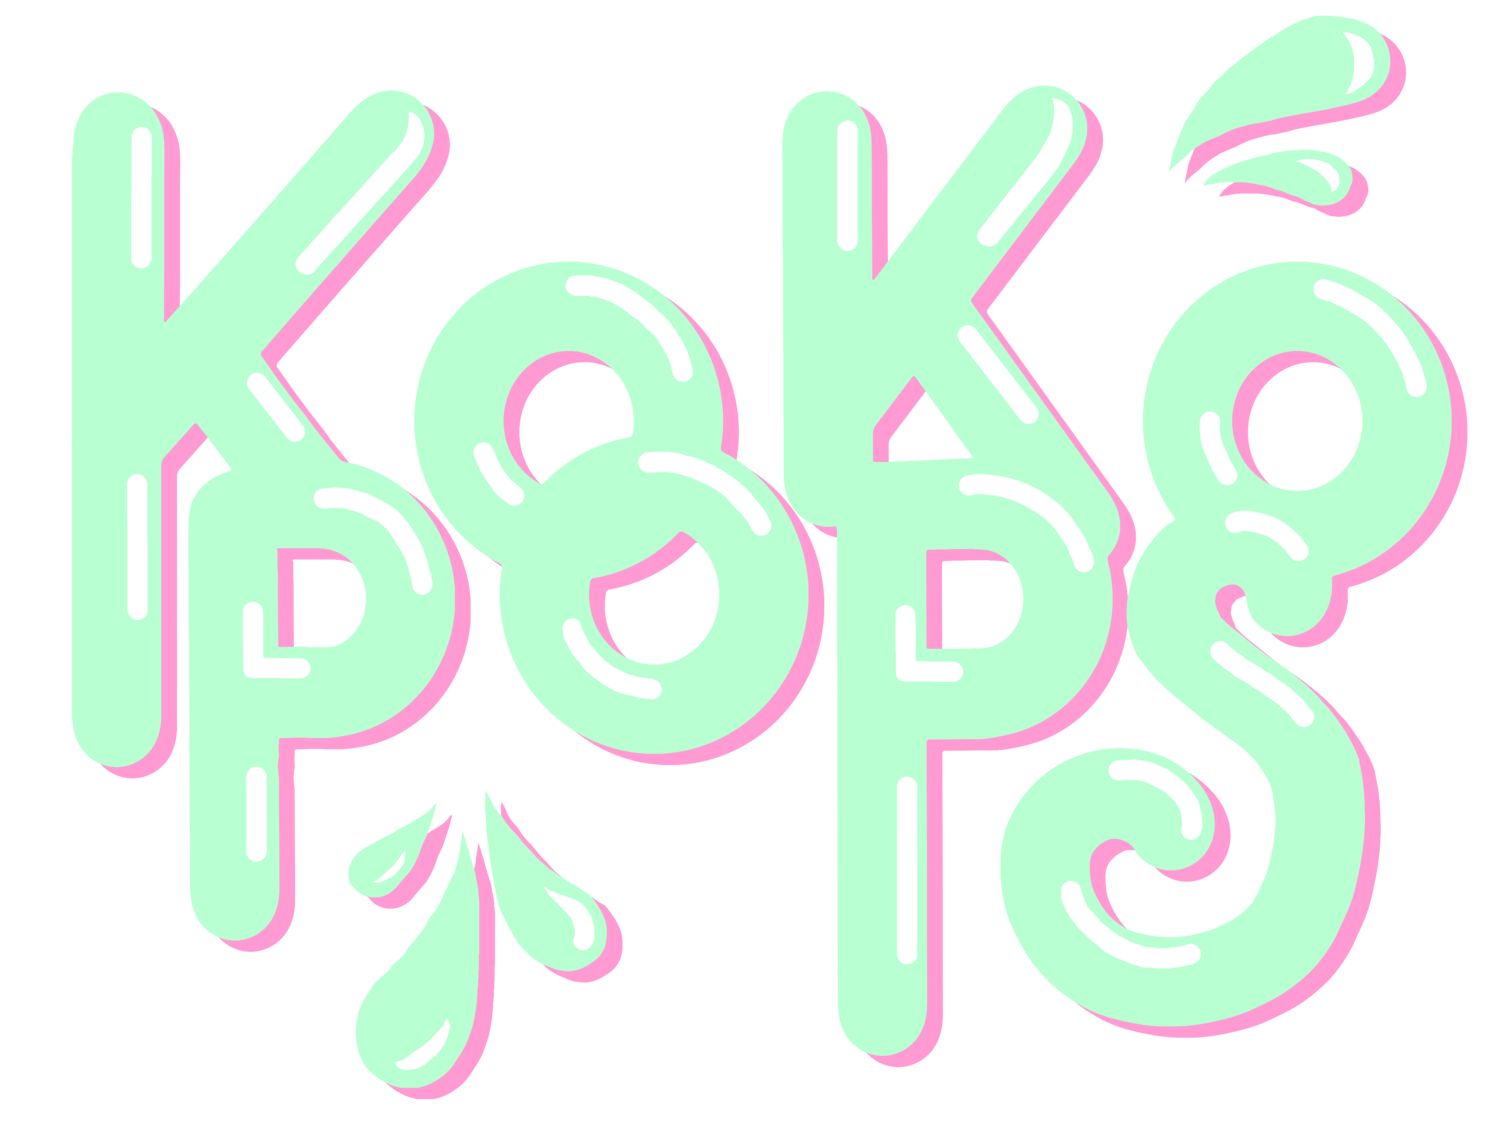 KoKo Pops Dance Company